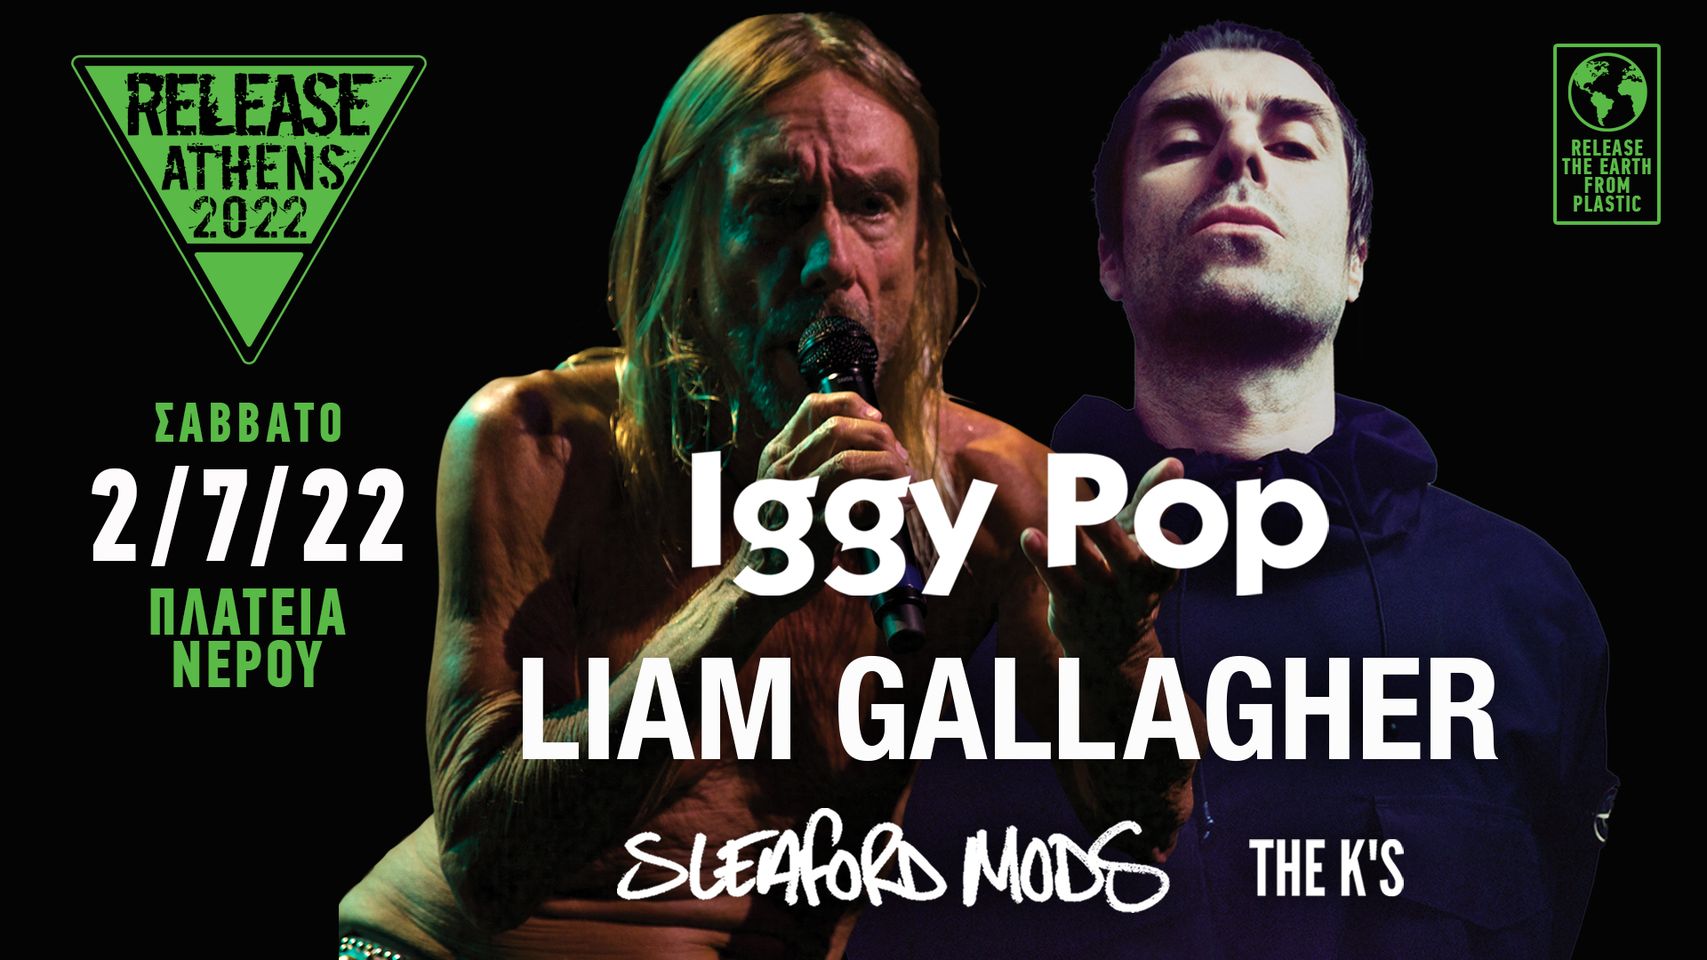 Release Athens Festival 2022 - Iggy Pop - Liam Gallagher